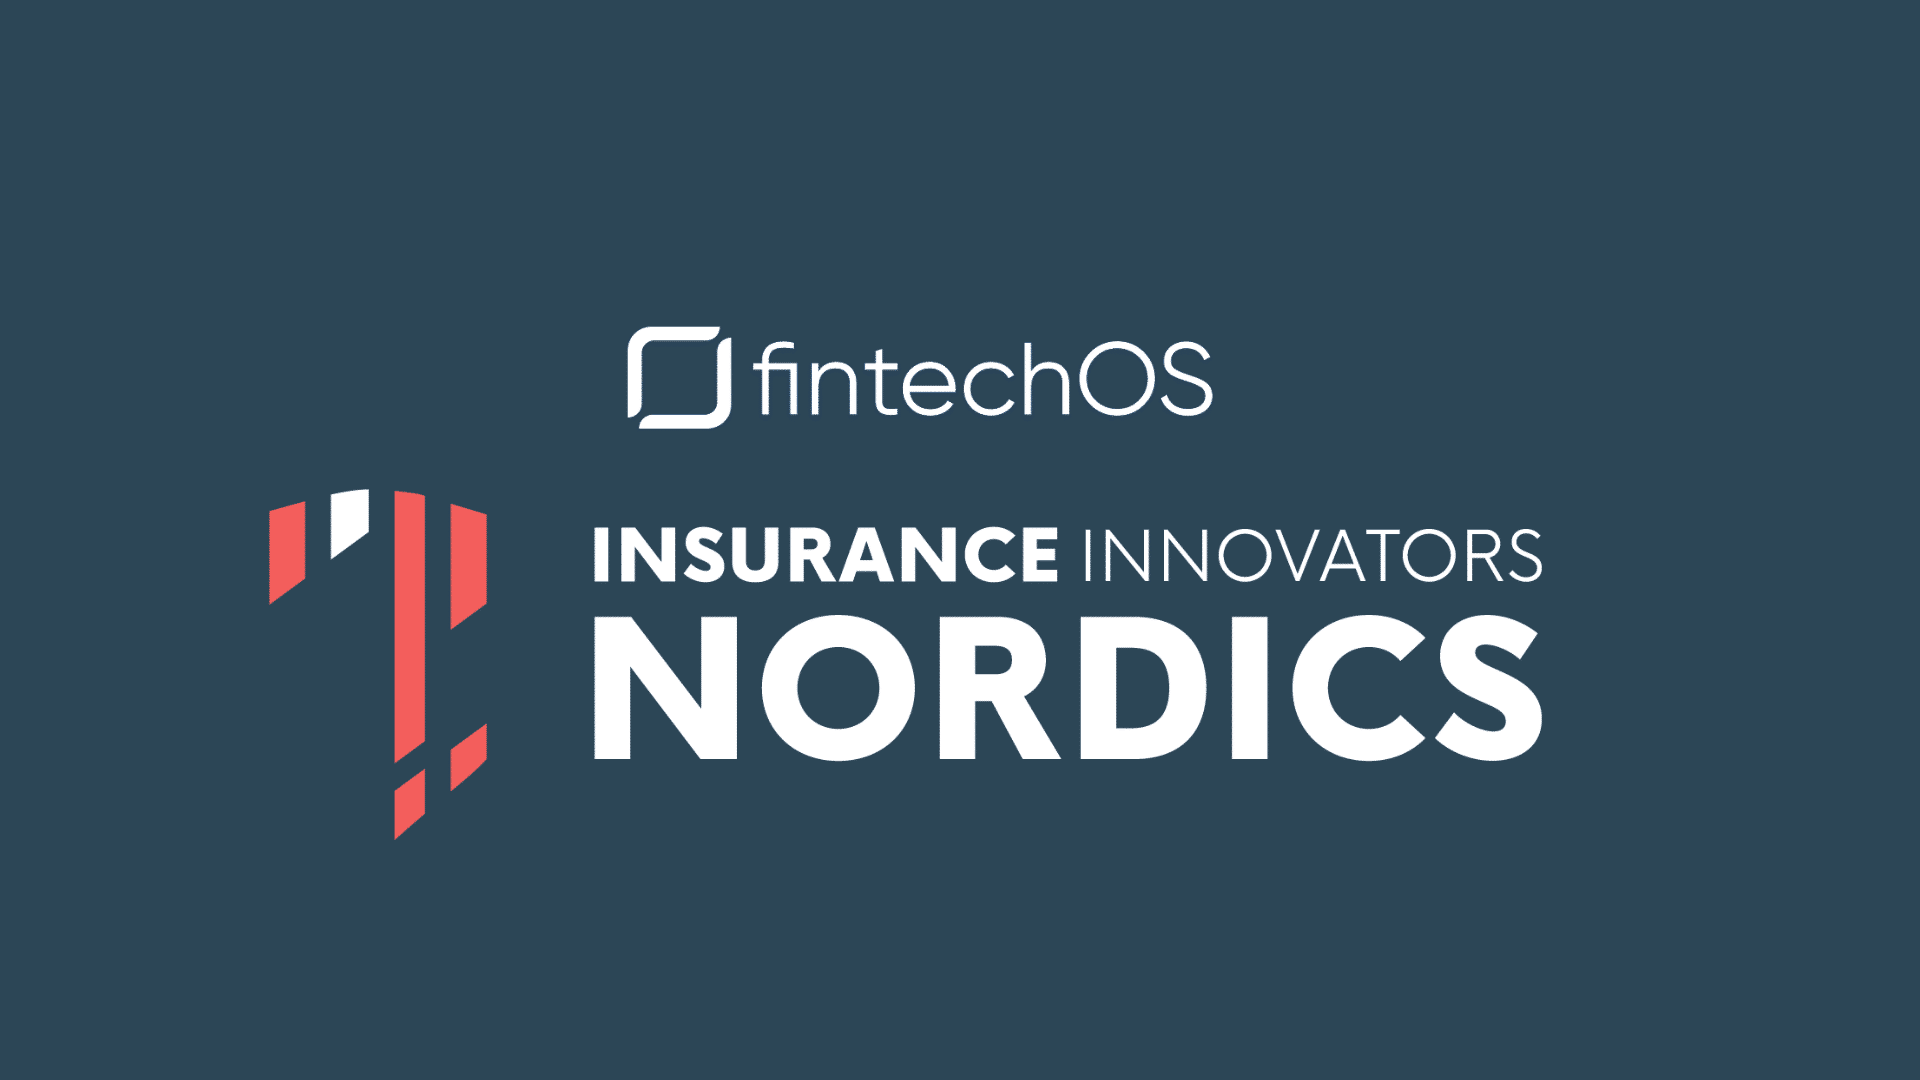 Insurance innovators nordics